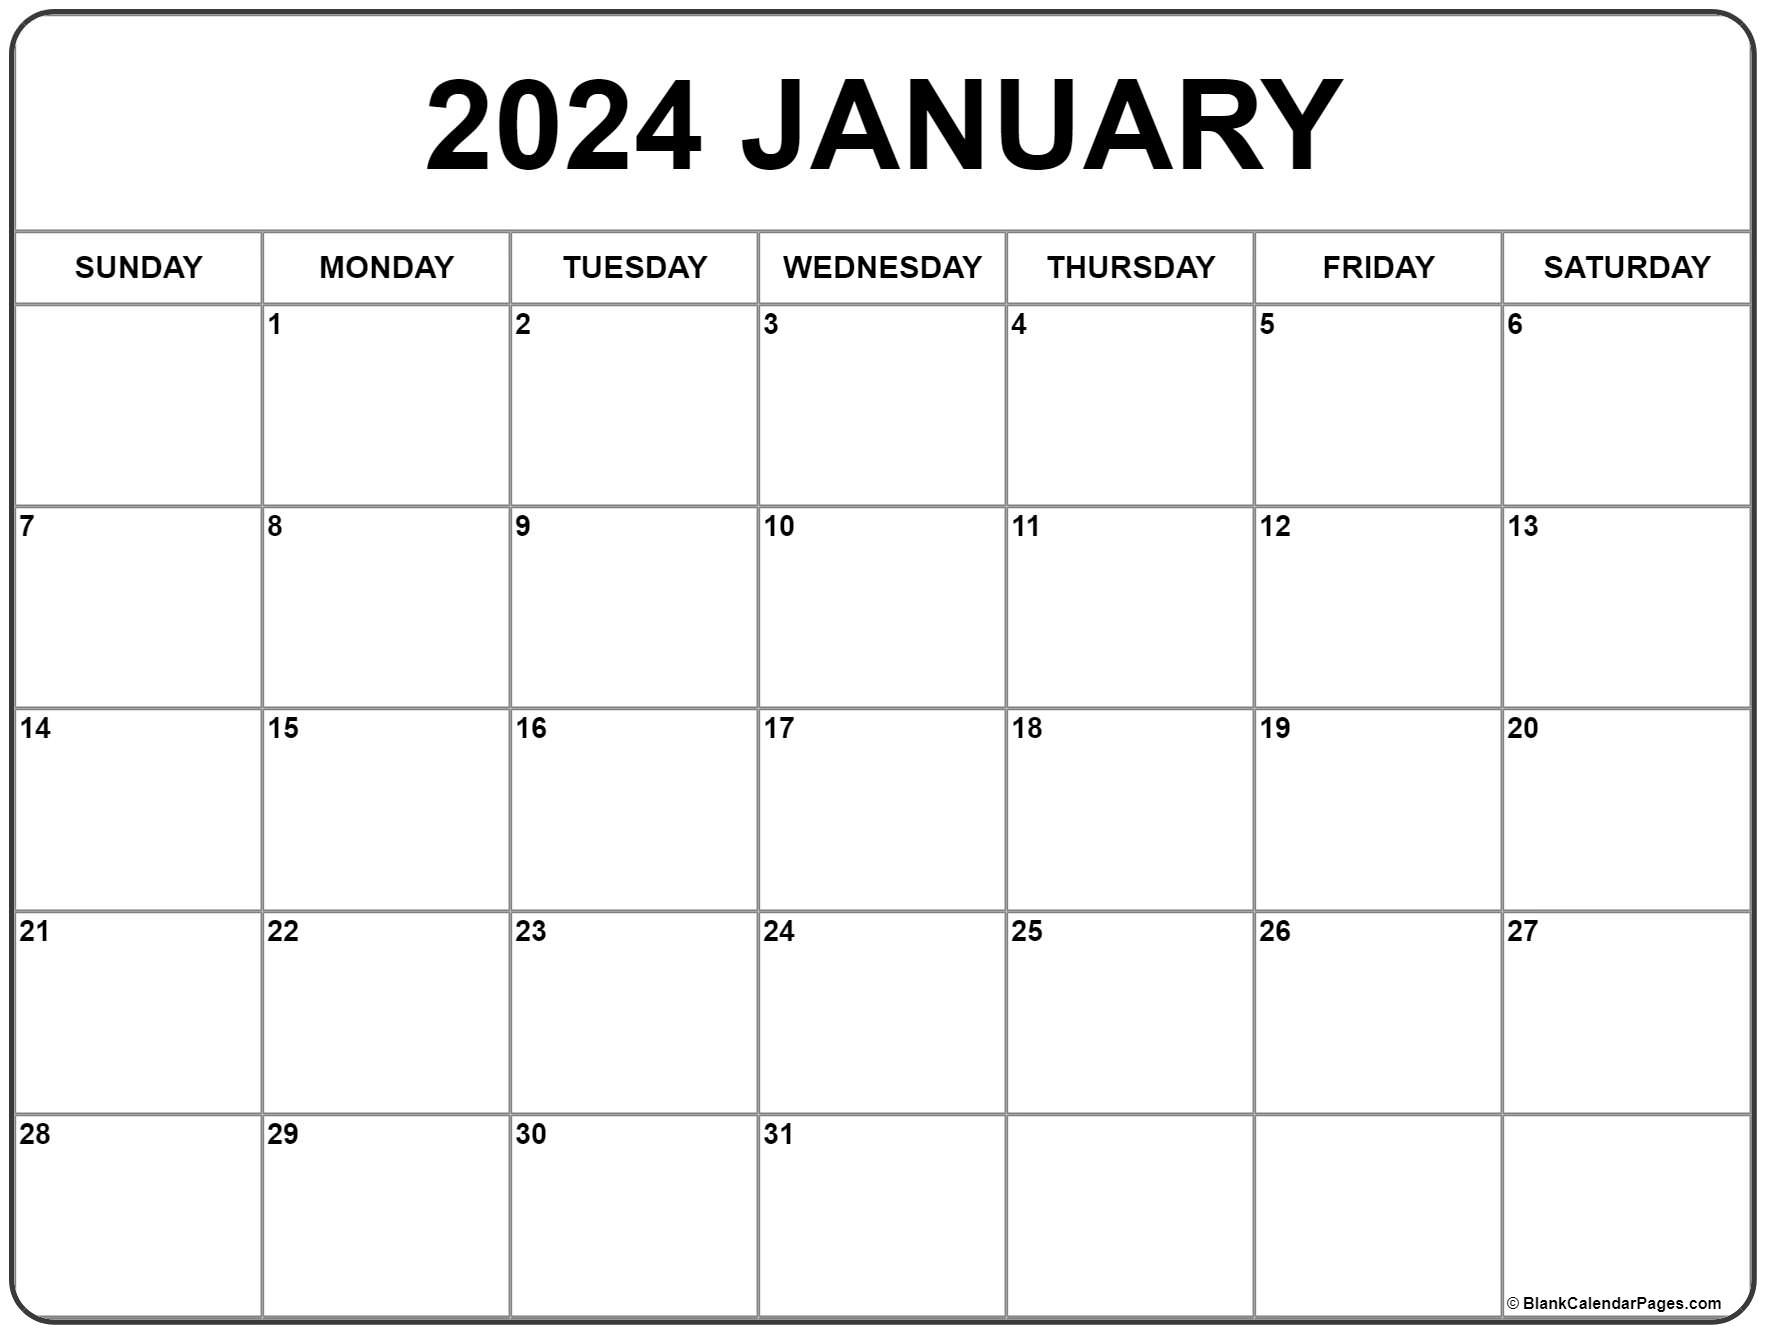 January 2024 Calendar | Free Printable Calendar for January Calendar 2024 Free Printable